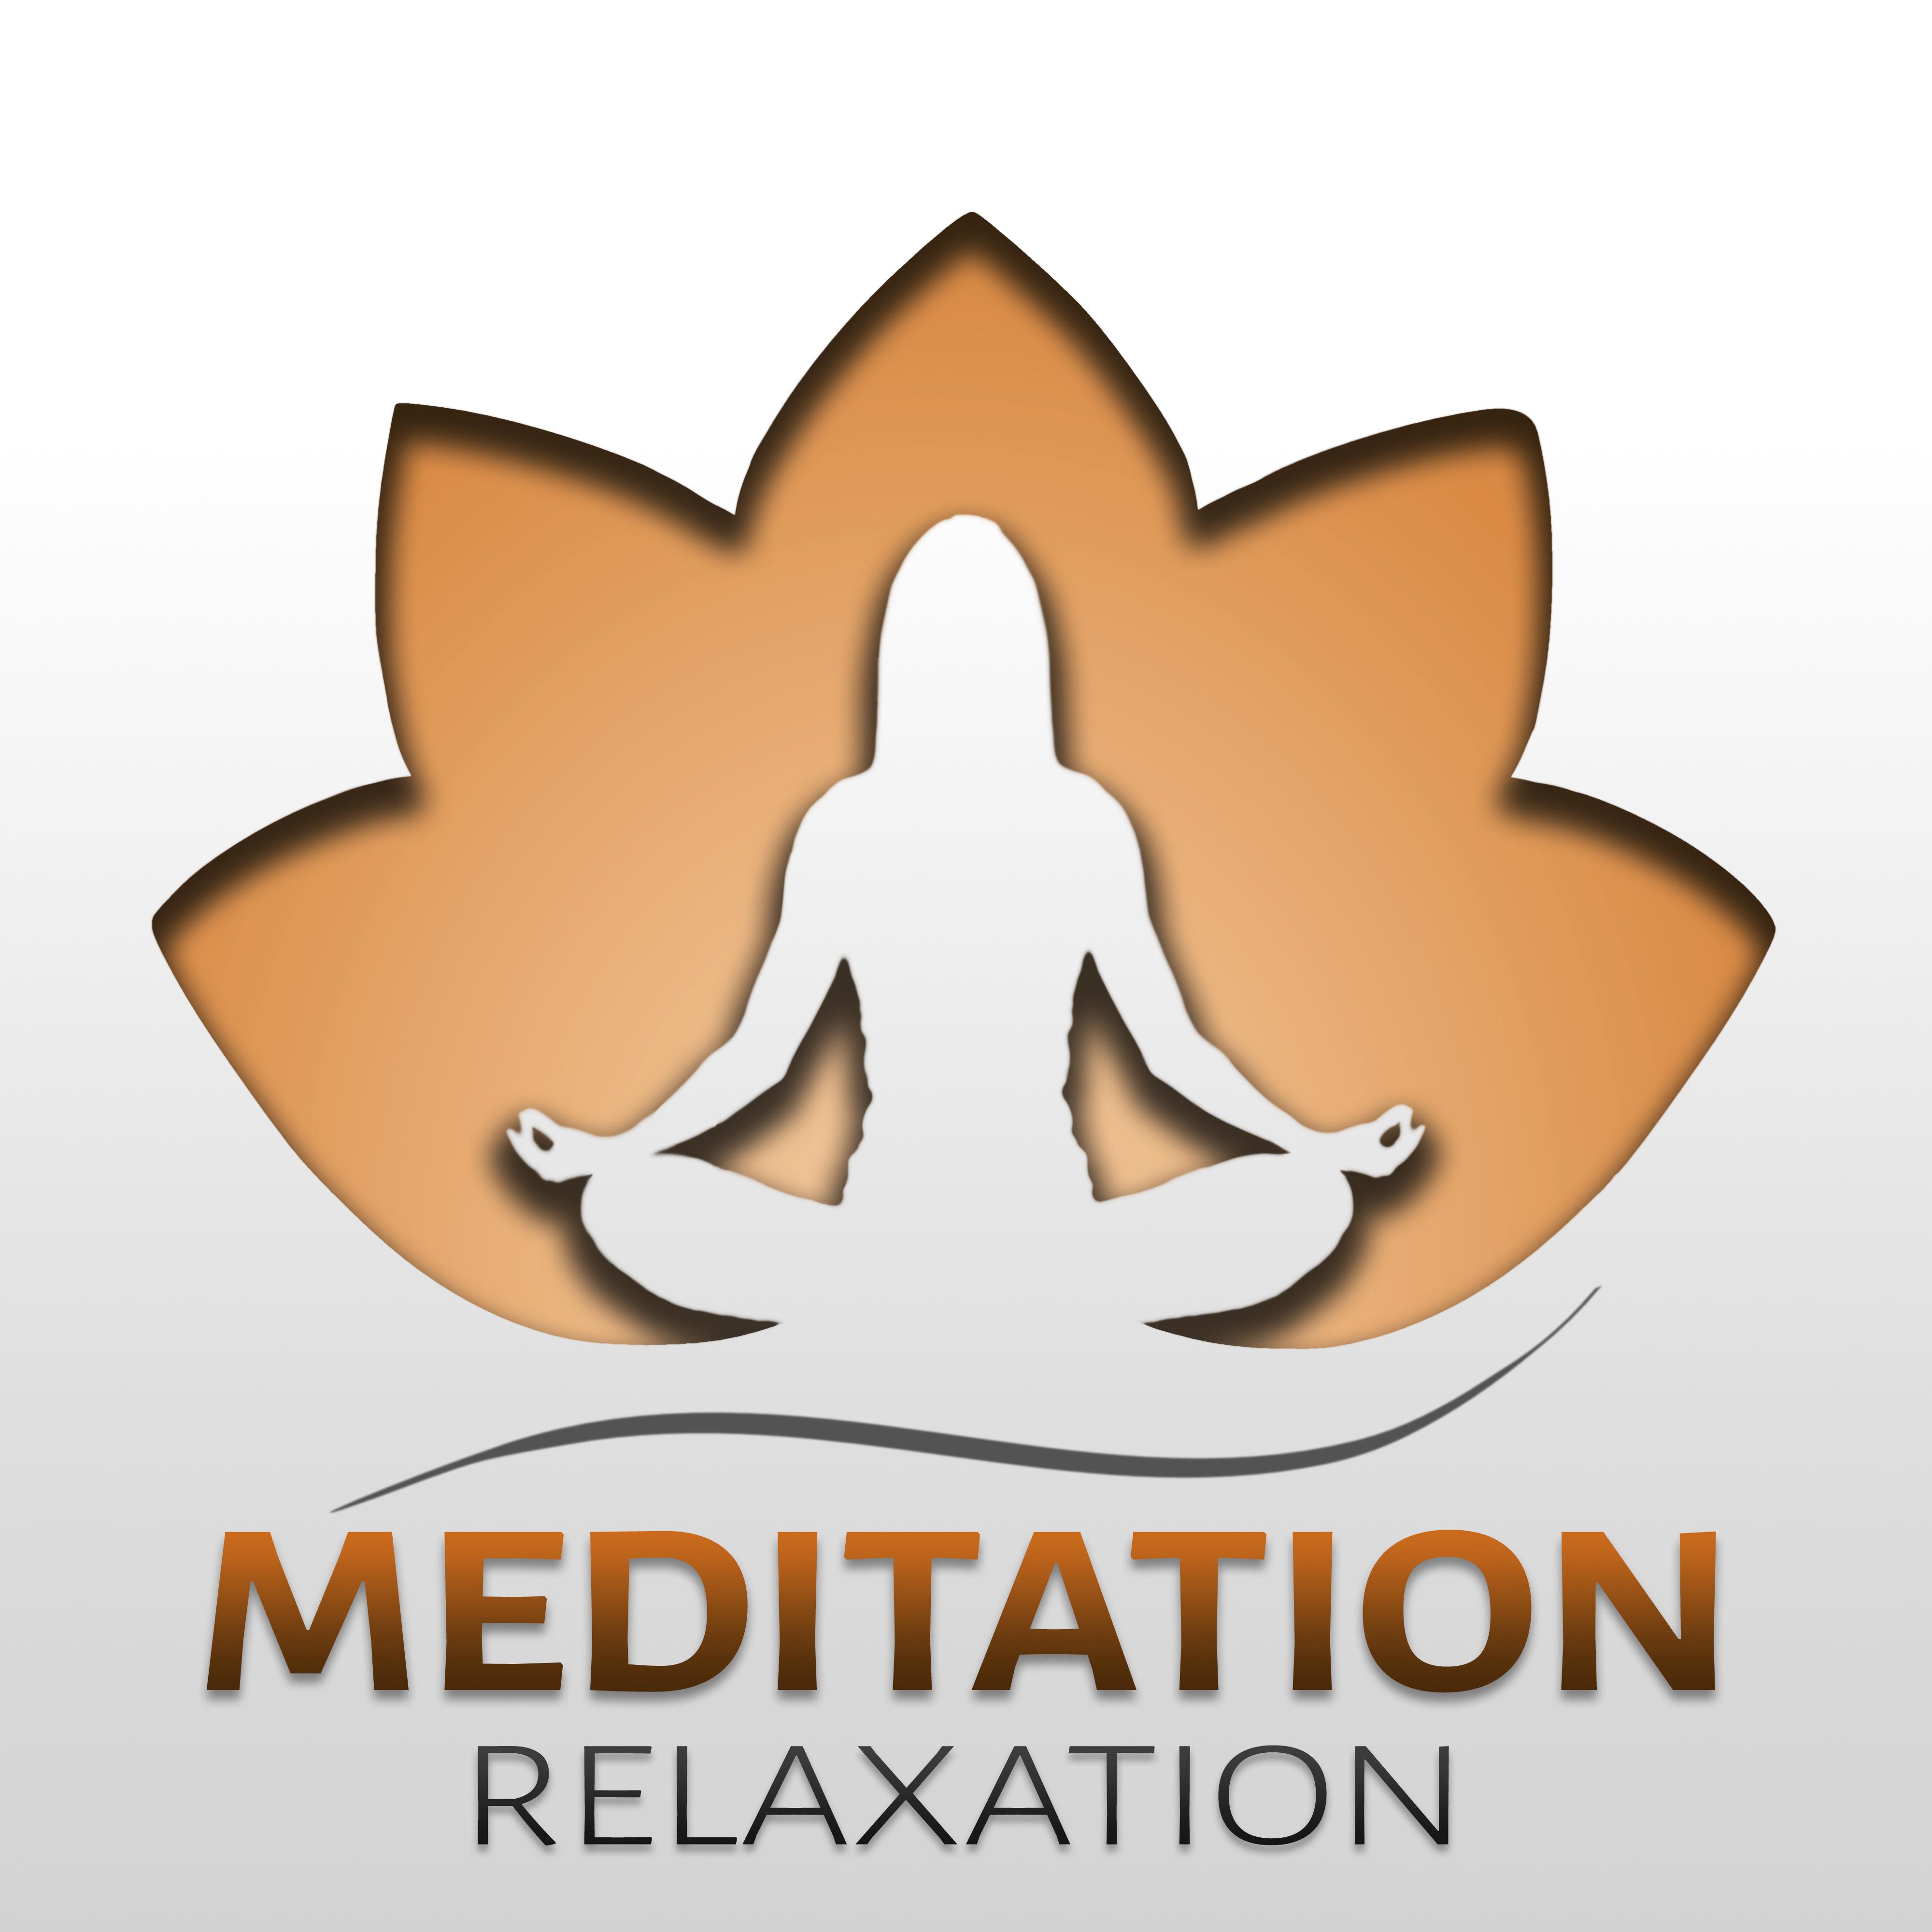 Meditation Relaxation - Reiki Healing, Mindfullness Meditation, Relaxation Music, Reiki Music Collection